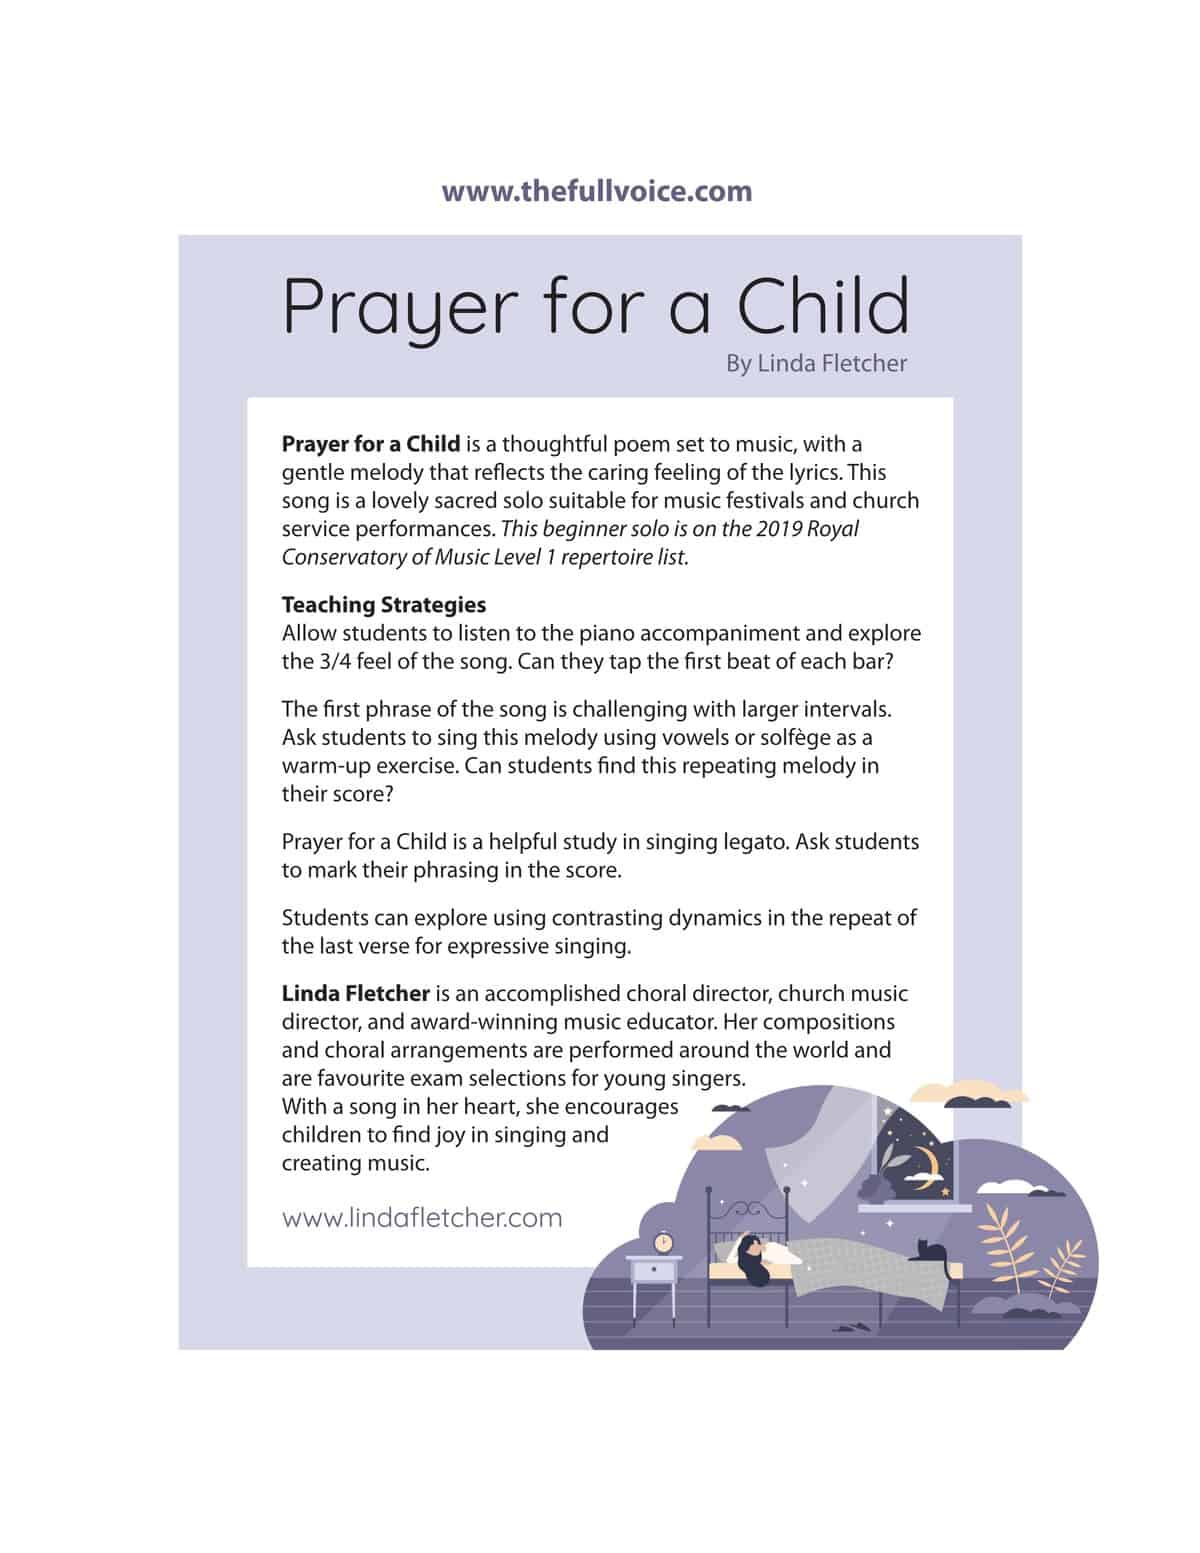 Prayer for a Child by Linda Fletcher